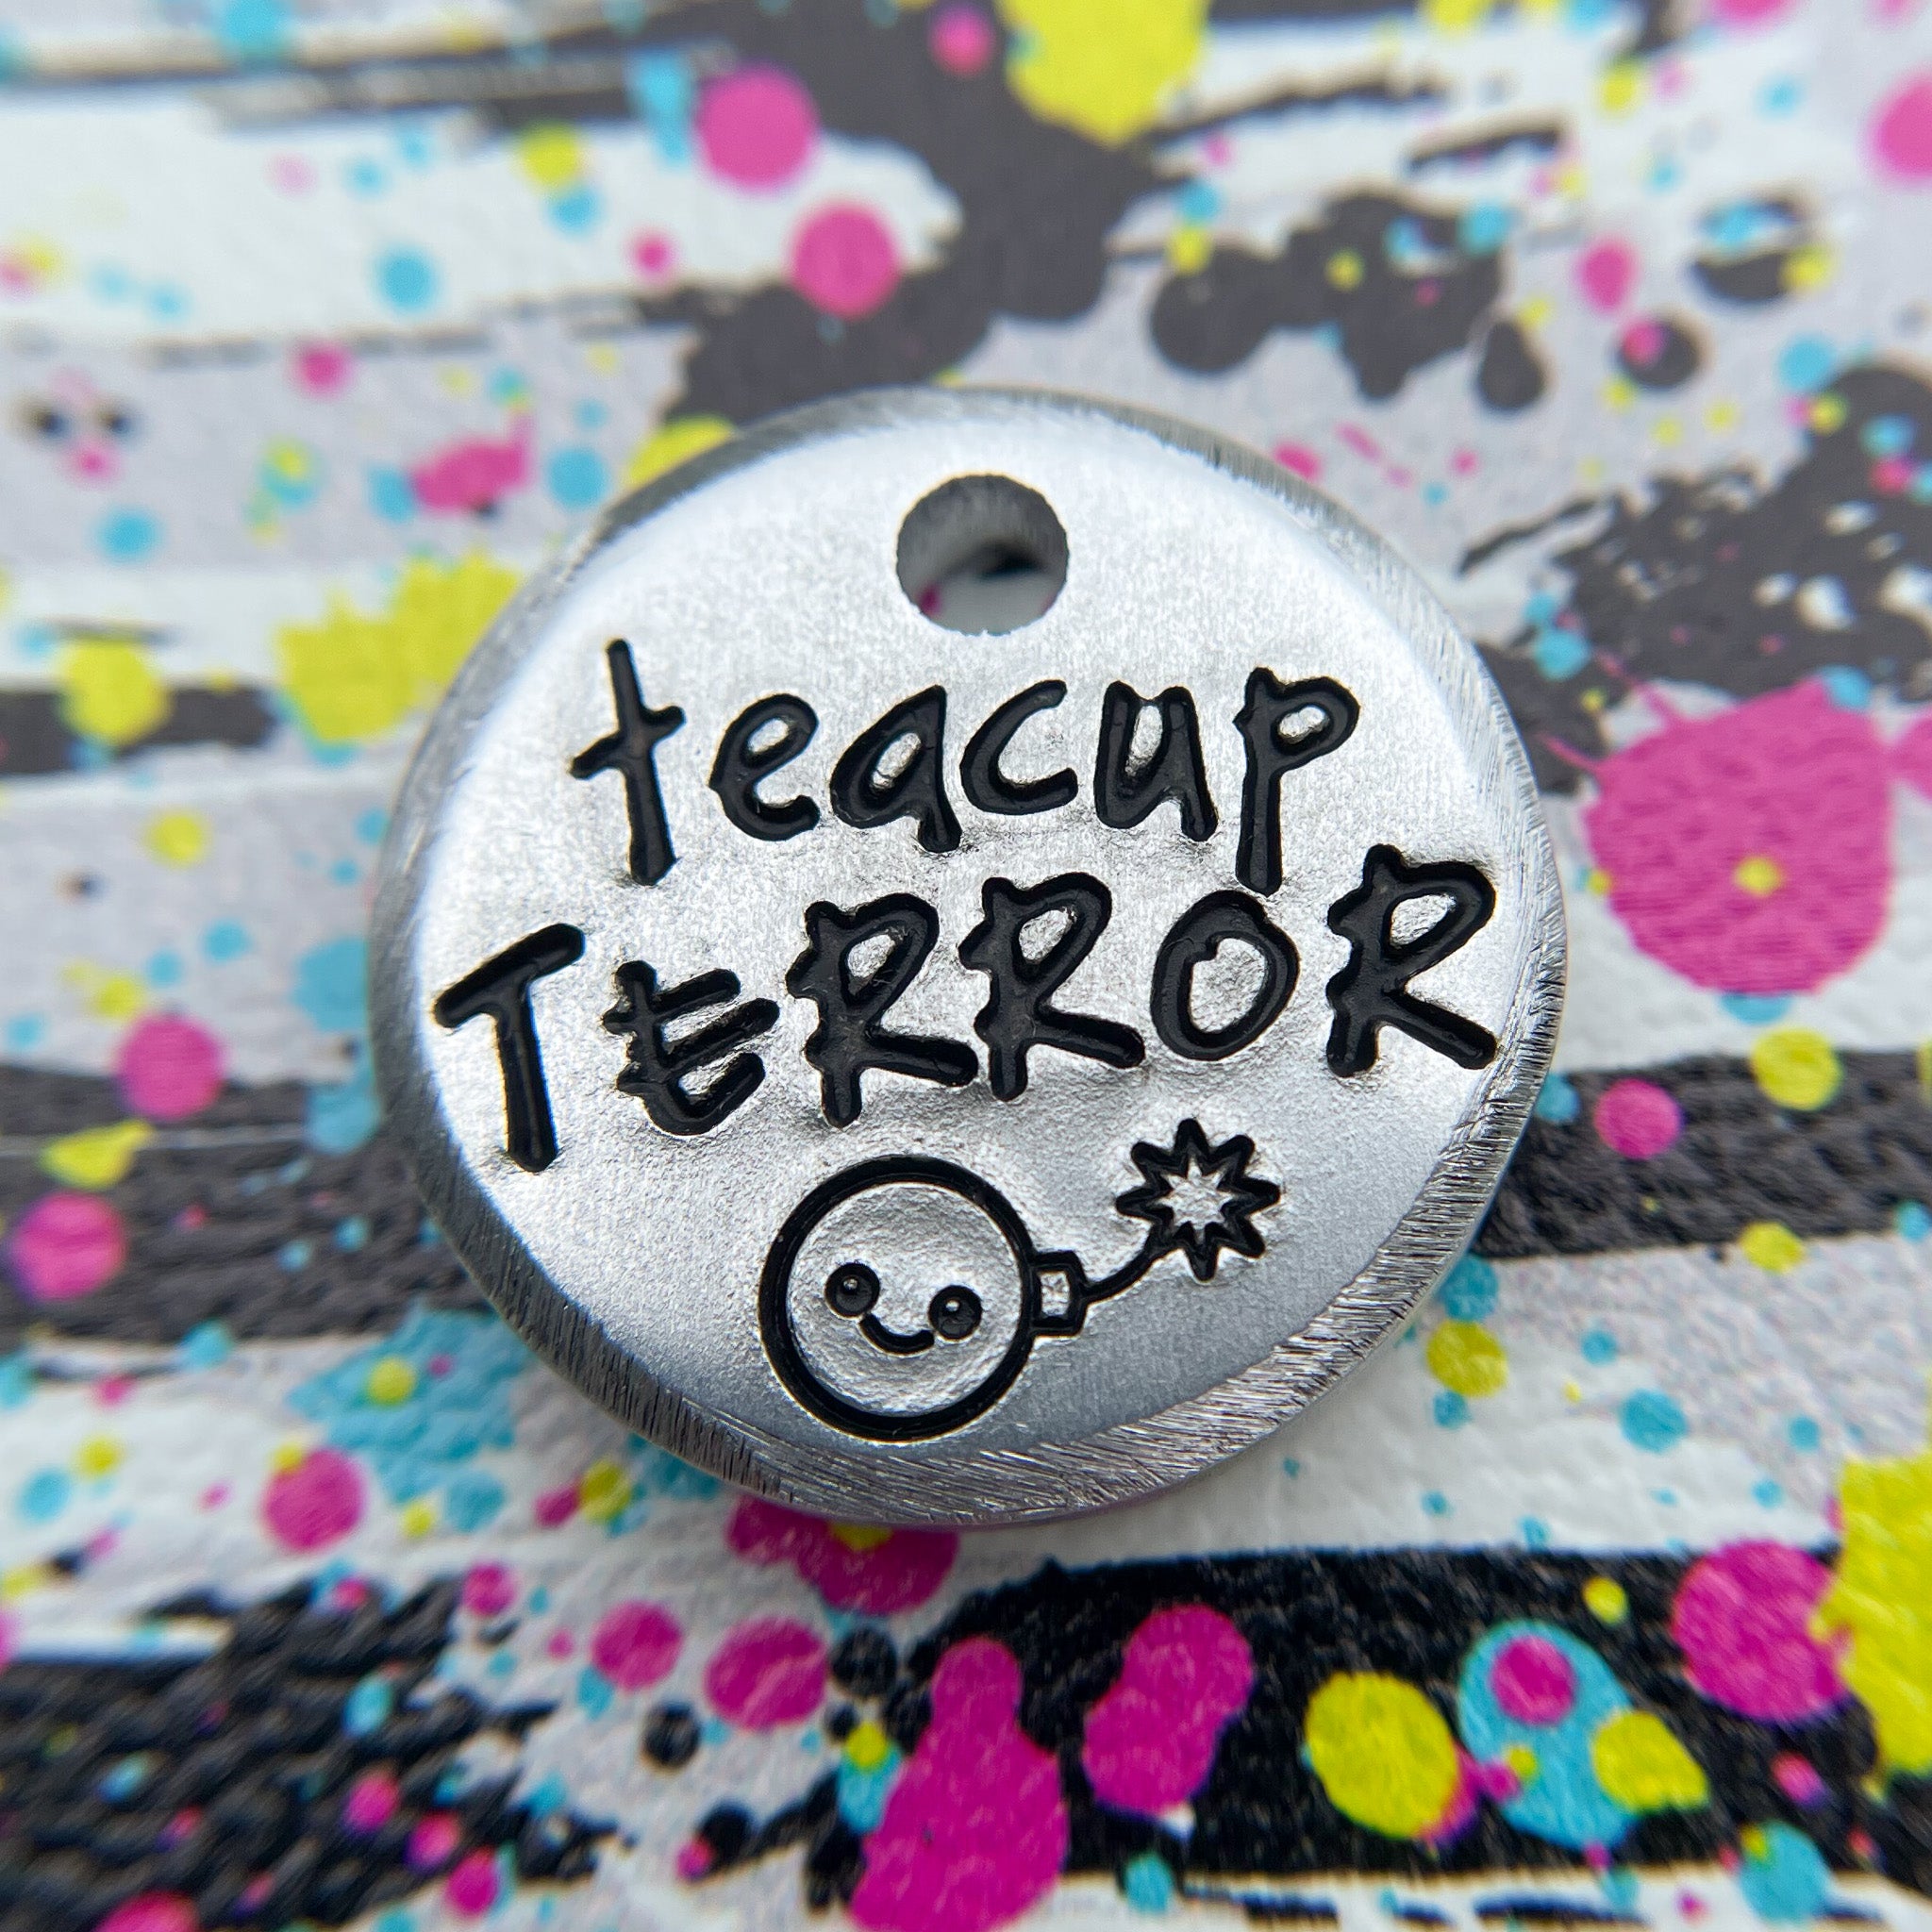 teacup terror